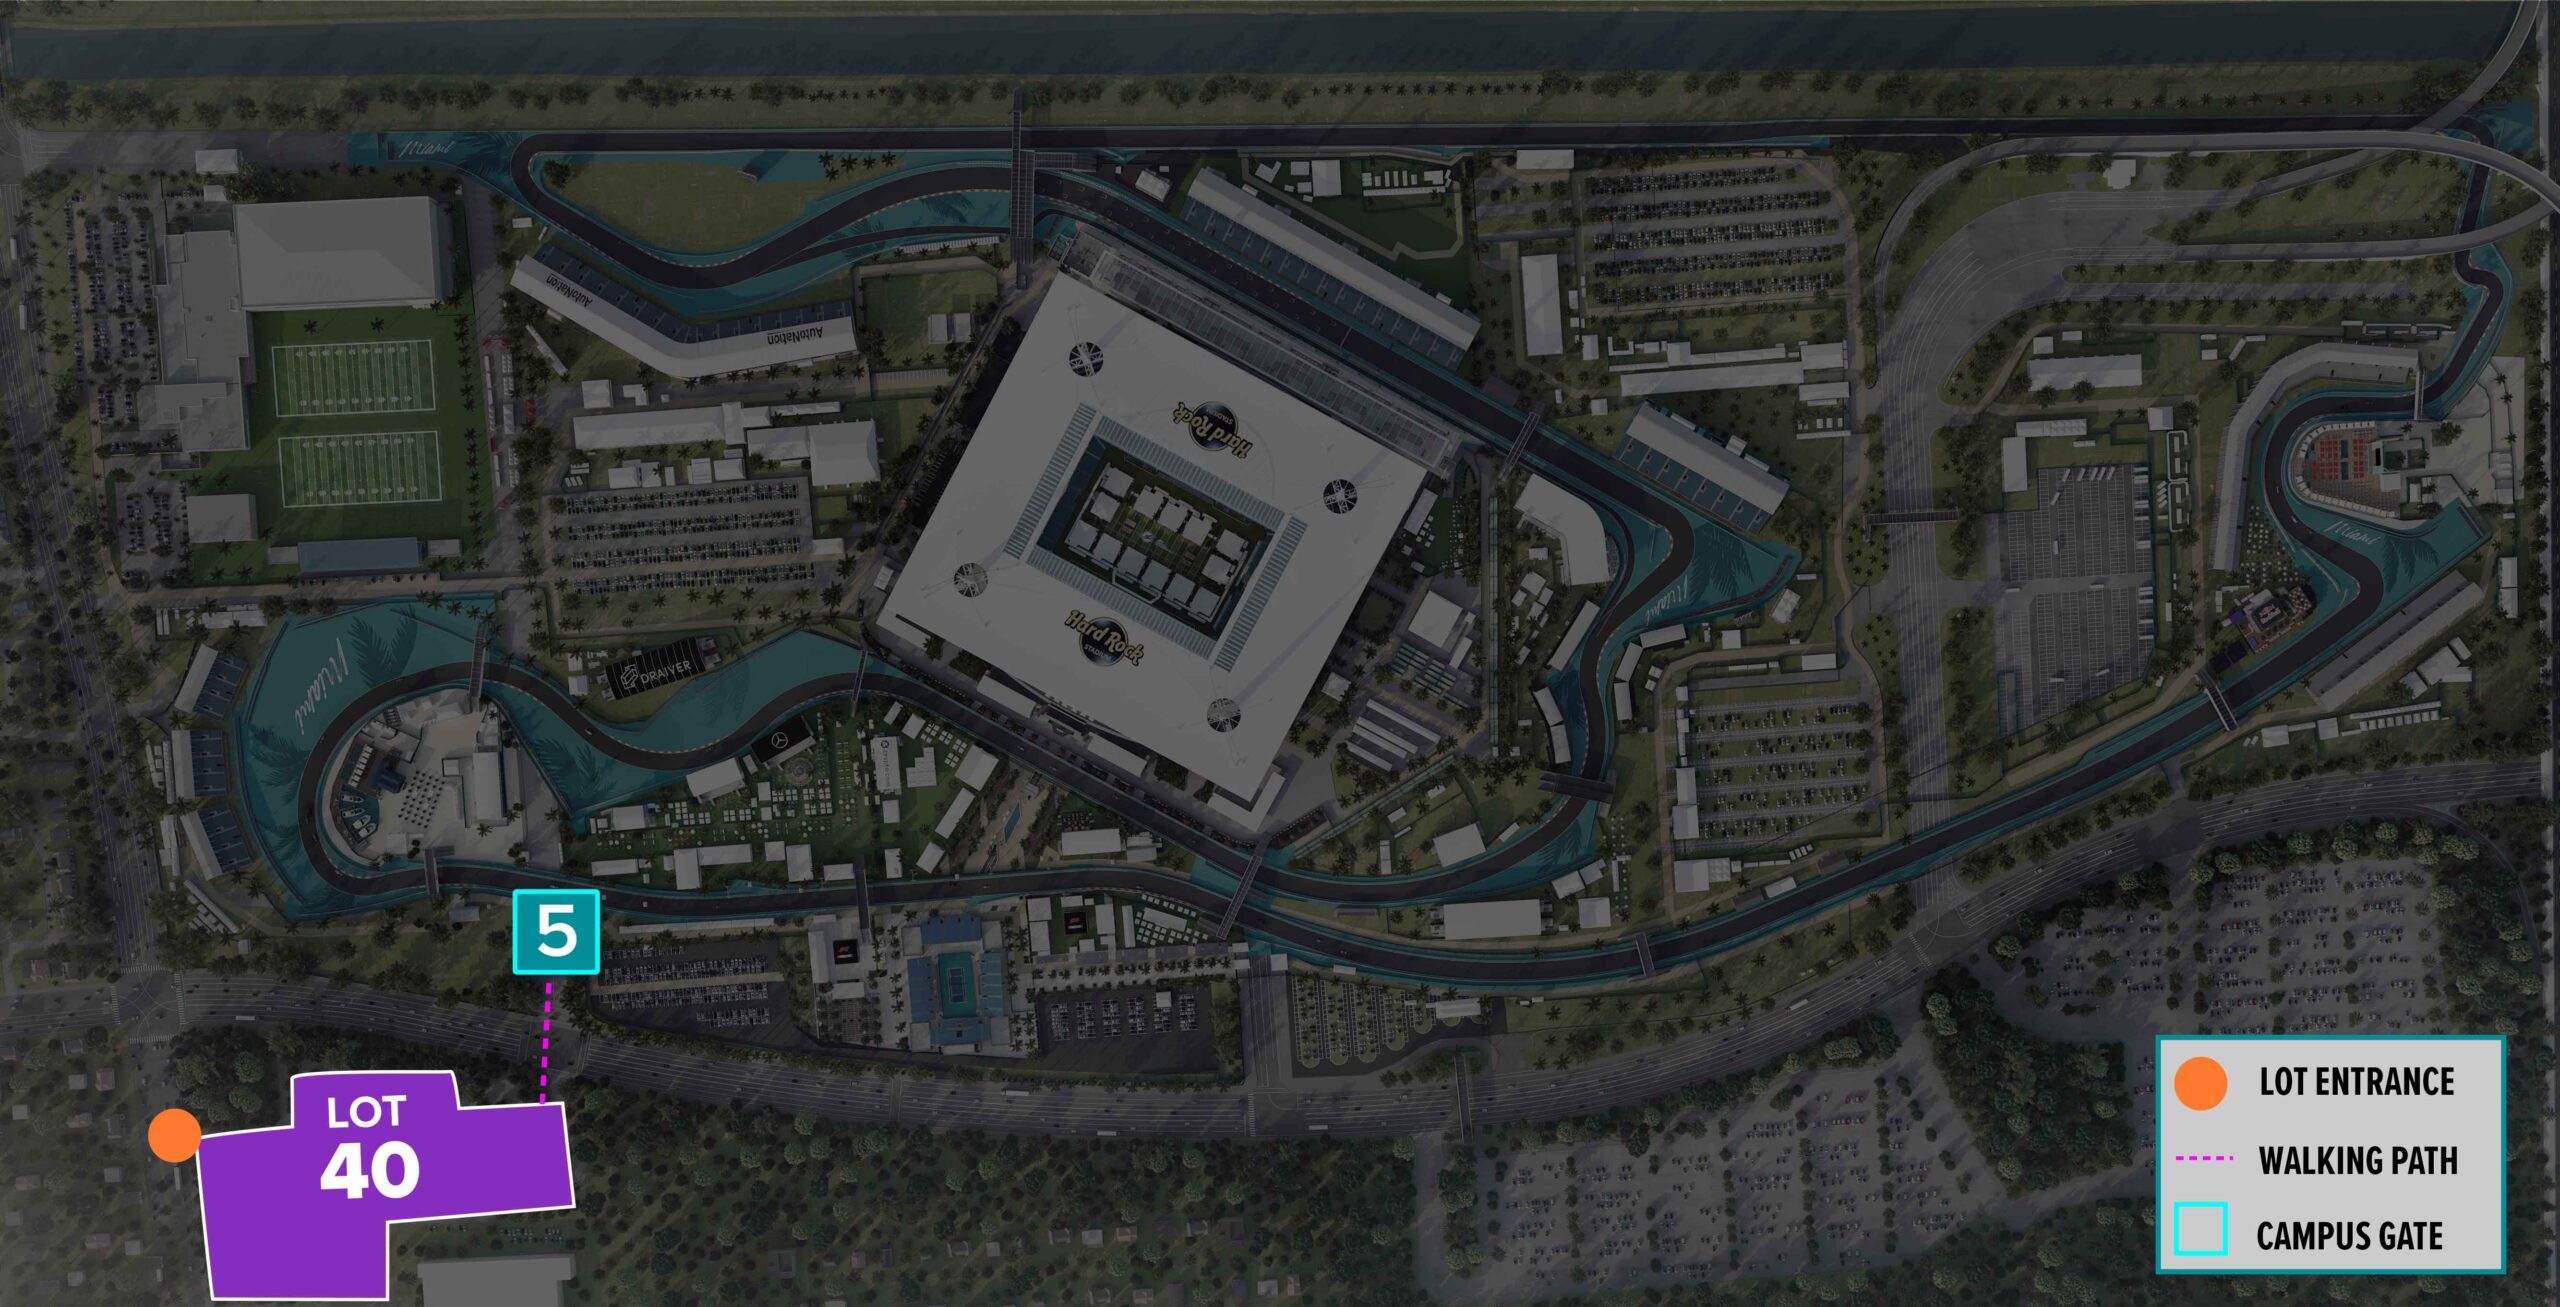 Parking Lot Location Map for Purple Lot 40 at the Formula 1 Crypto.com Miami Grand Prix